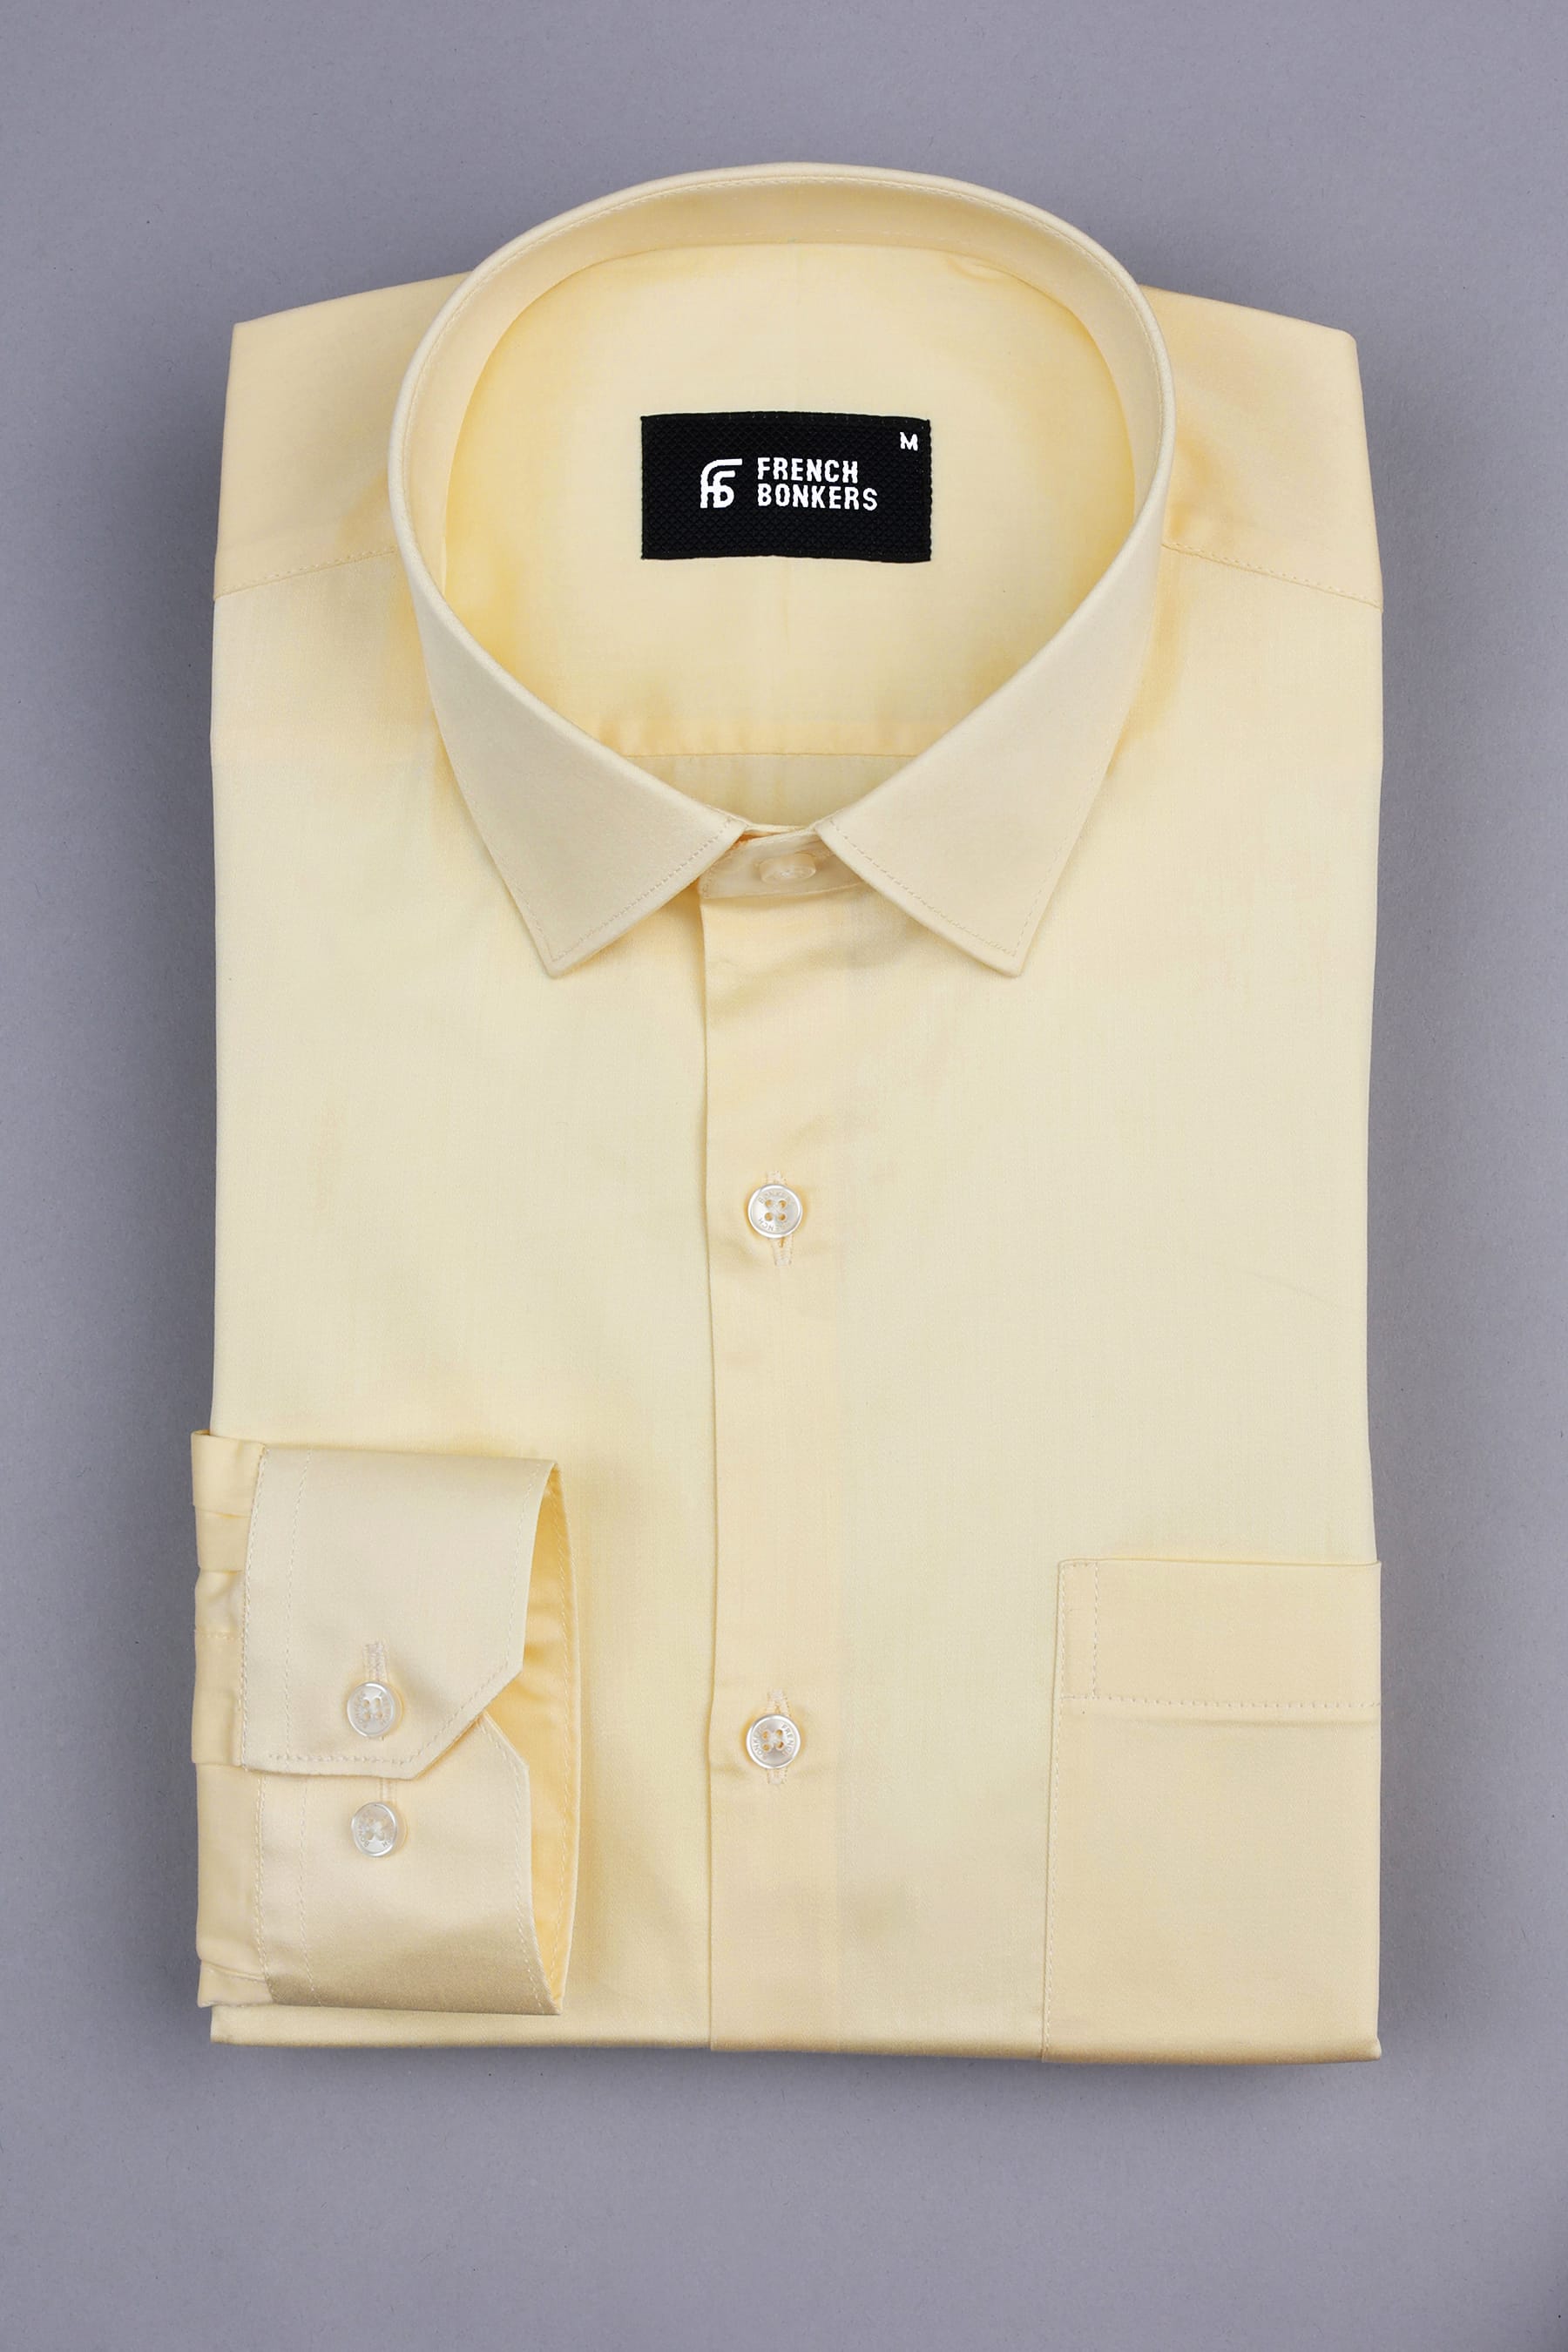 Canary yellow cotton satin shirt